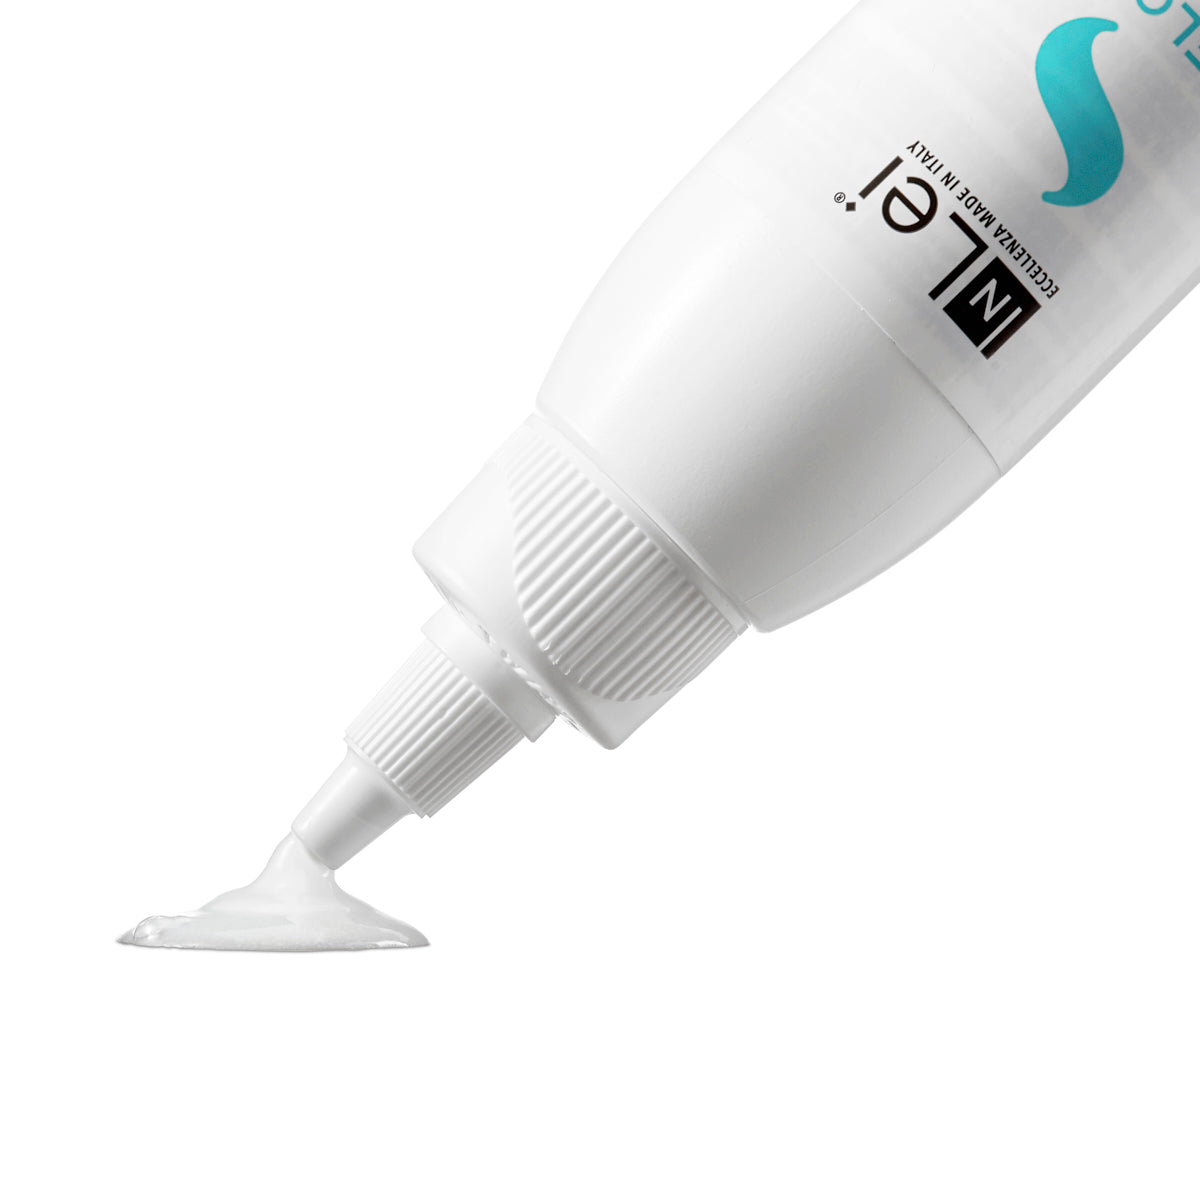 InLei Tint Developer Cream 1.5% - 100ml